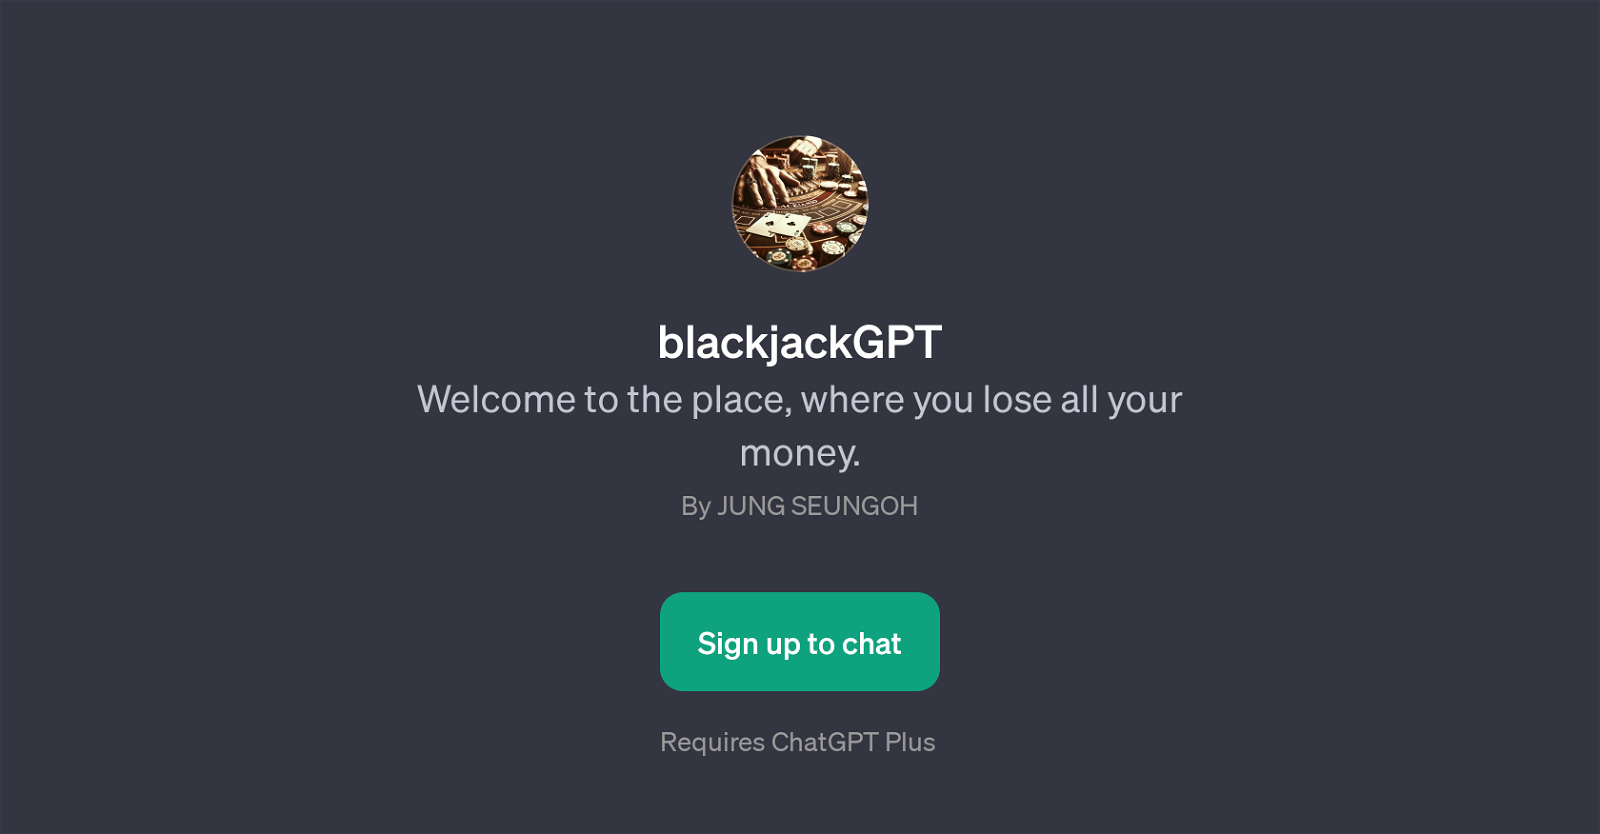 blackjackGPT website